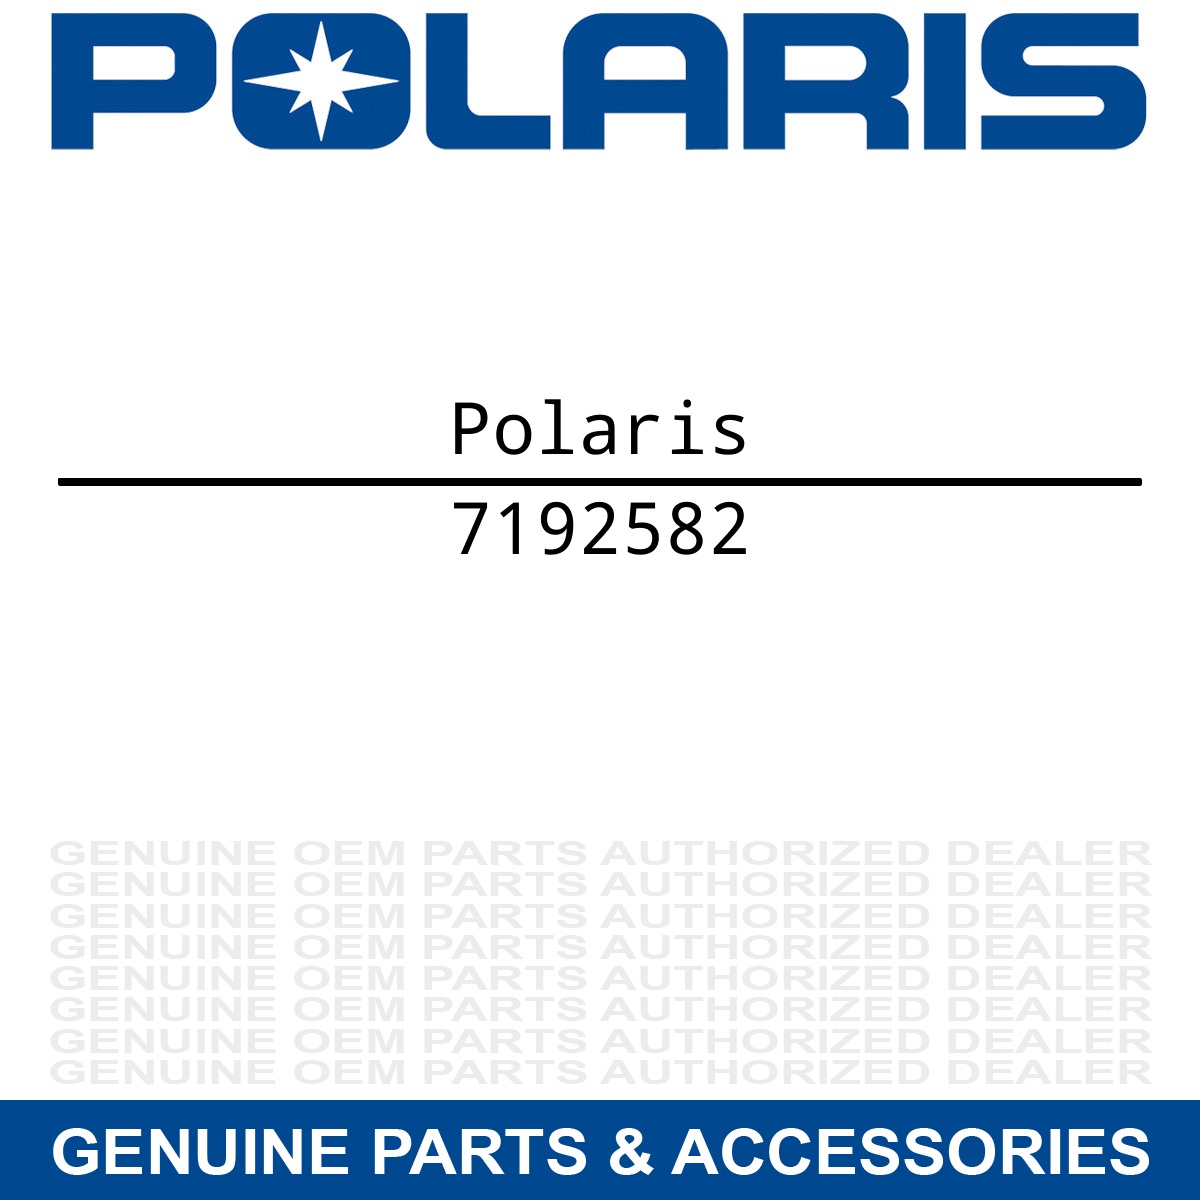 Polaris 7192582 Left Hand Sponsorship Side Panel Decal